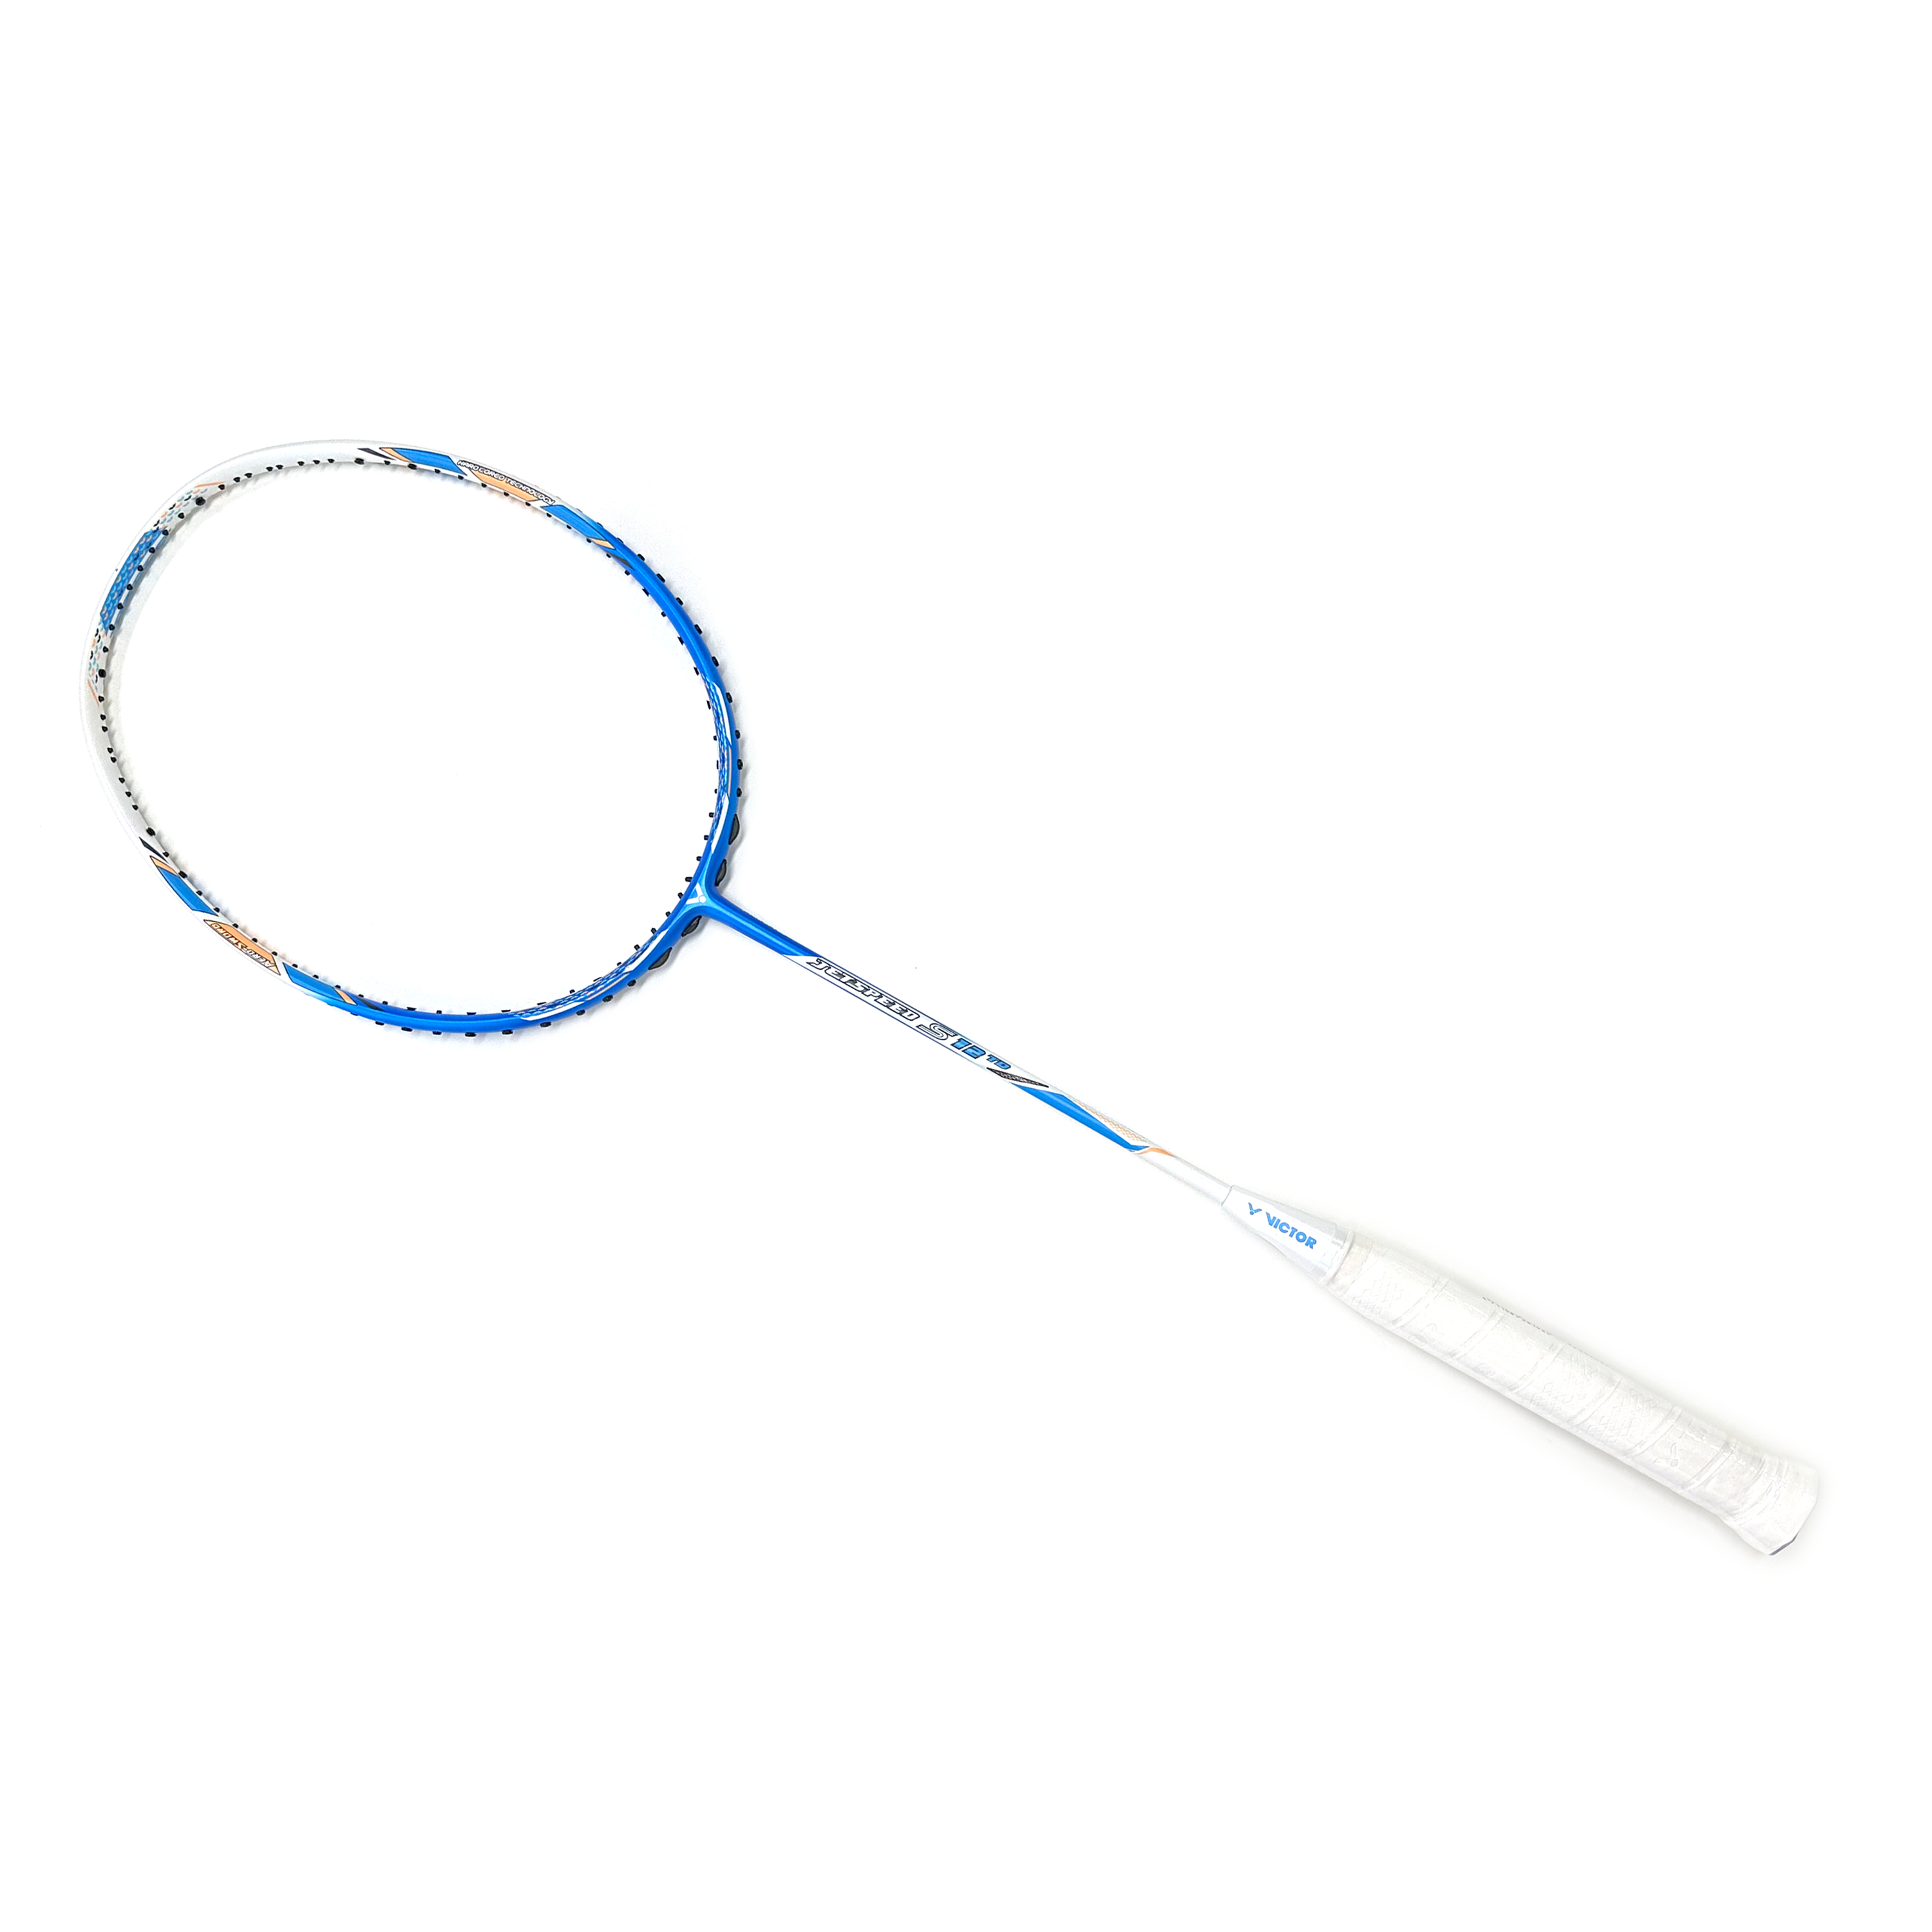 Victor Jetspeed S 12 TD Badminton Racquet 4U(83g)G6